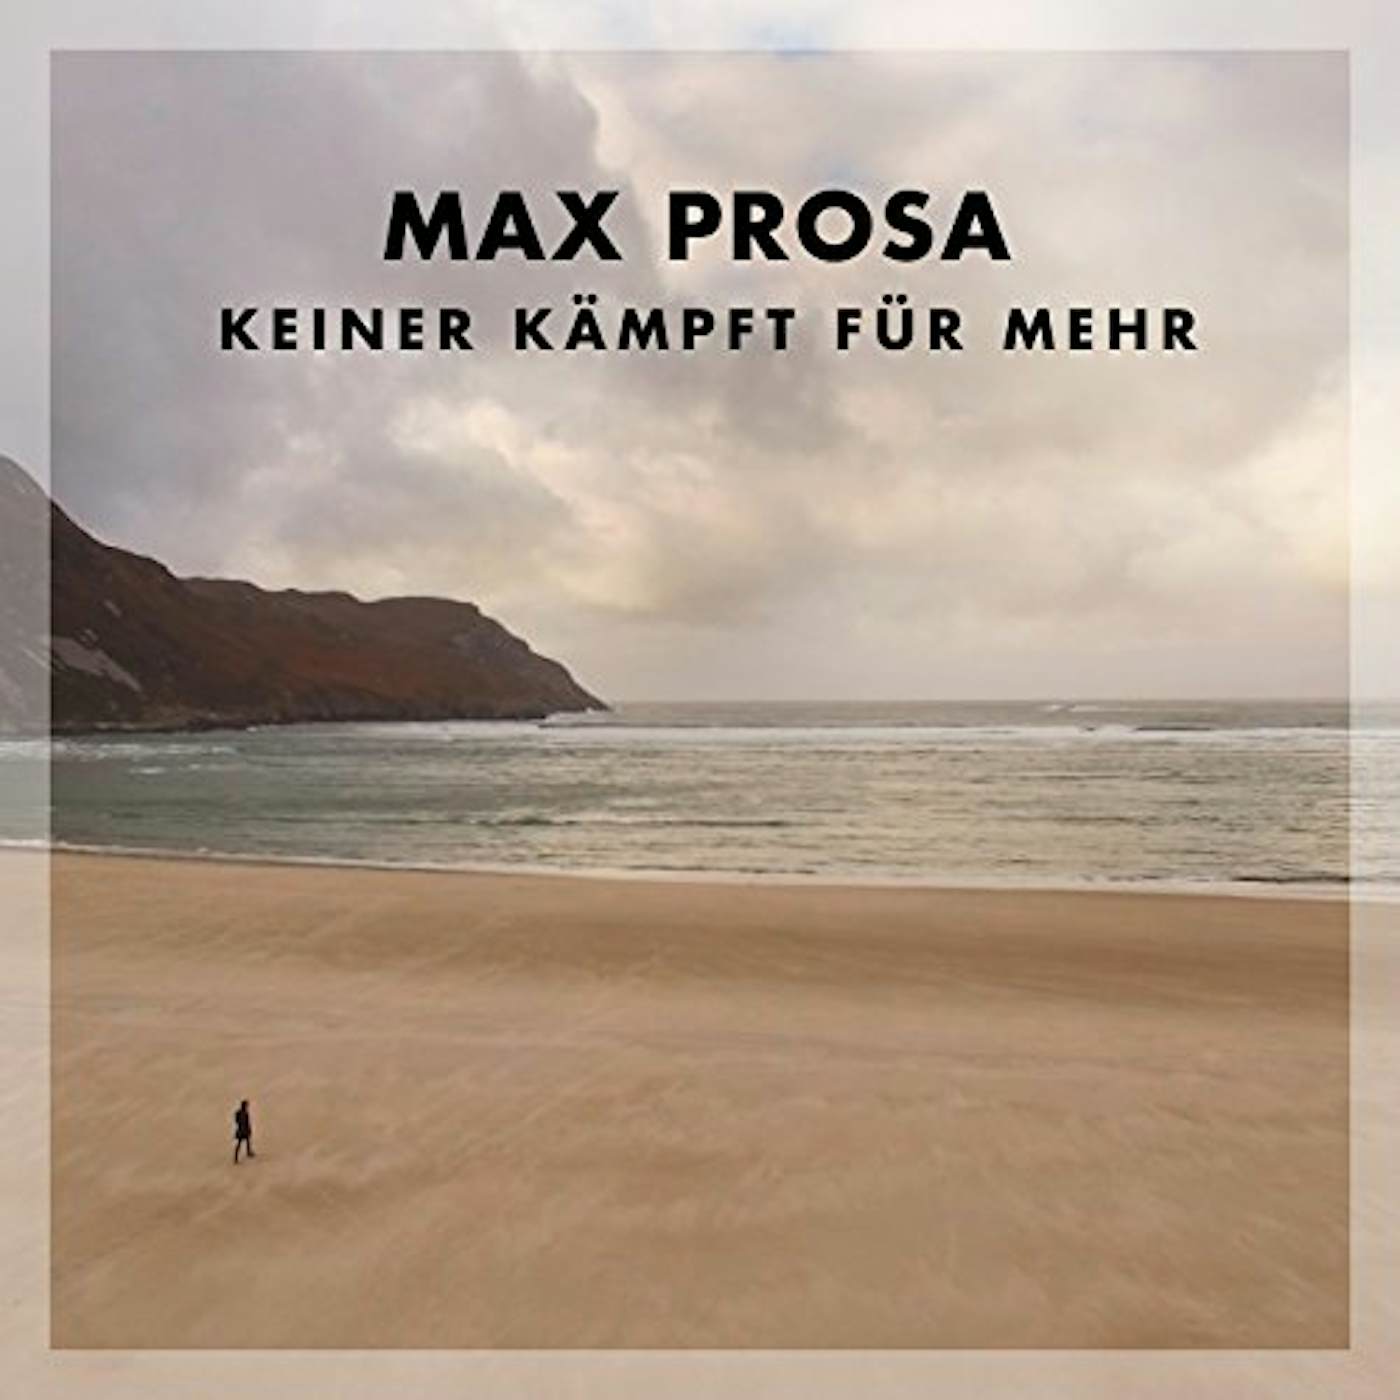 Max Prosa KEINER KAMPFT FUR MEHR Vinyl Record